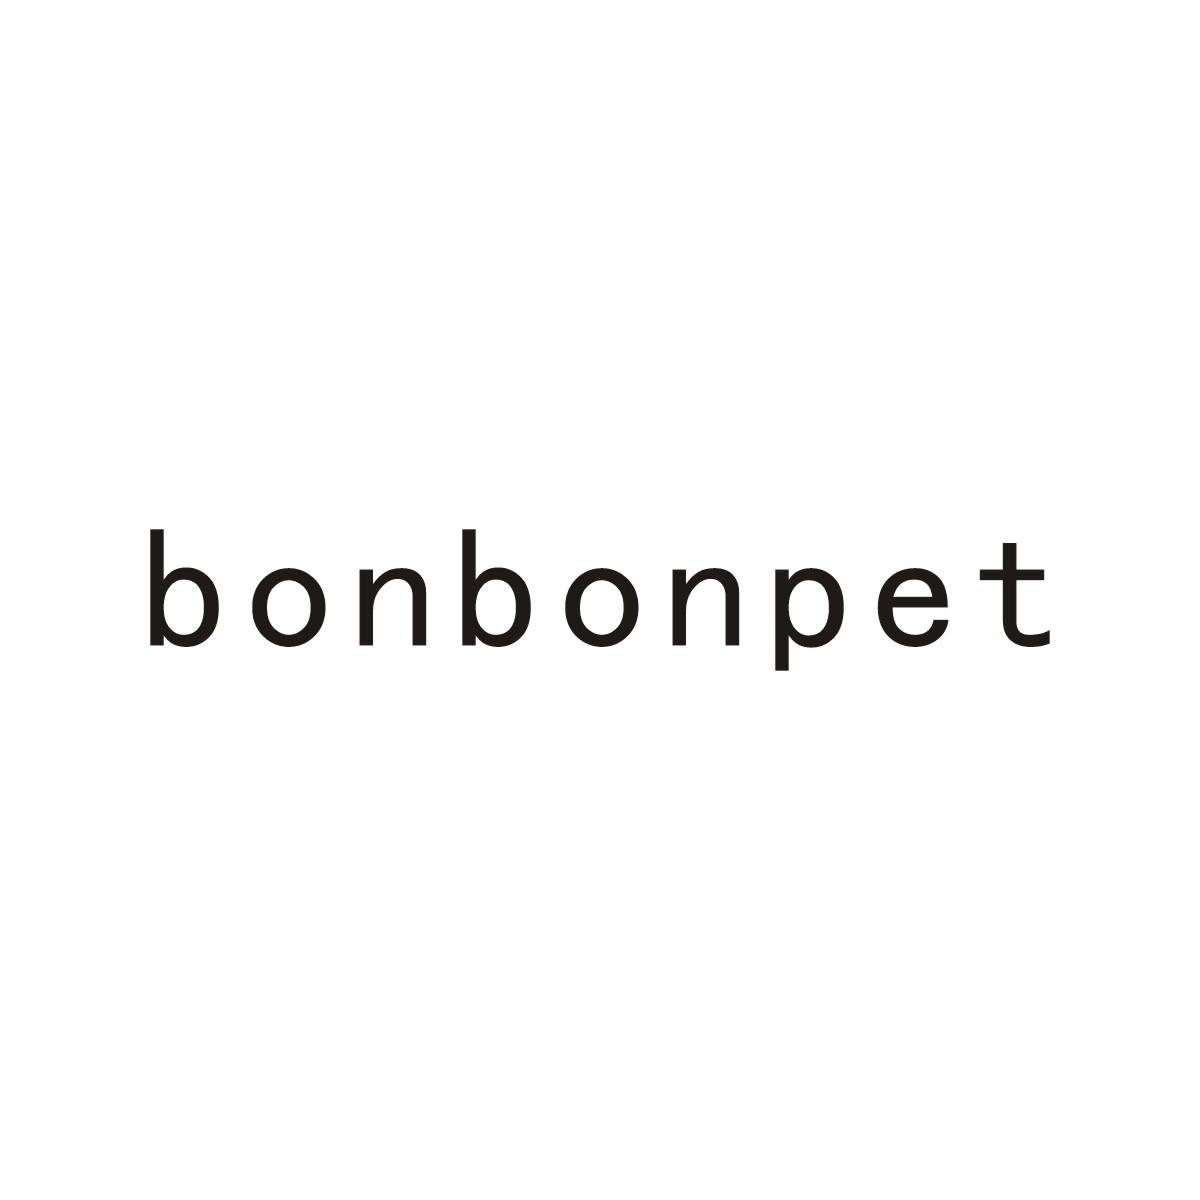 BONBONPET包扎绷带商标转让费用买卖交易流程